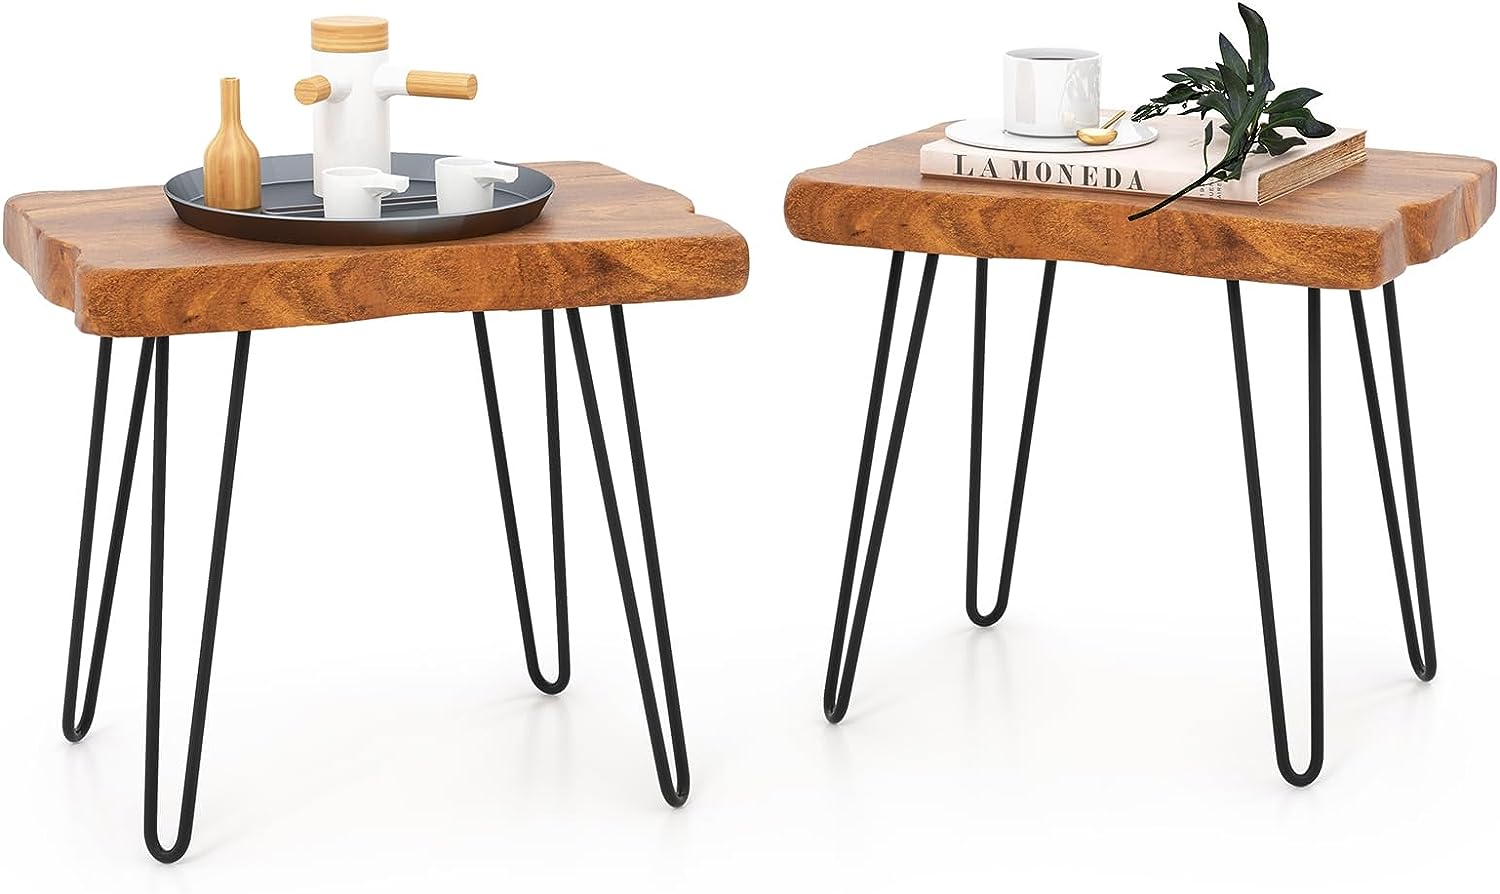 Giantex Teak Wood End Table, Solid Live Edge Outdoor Side Table w/Natural Grain & Heavy-Duty Metal Legs